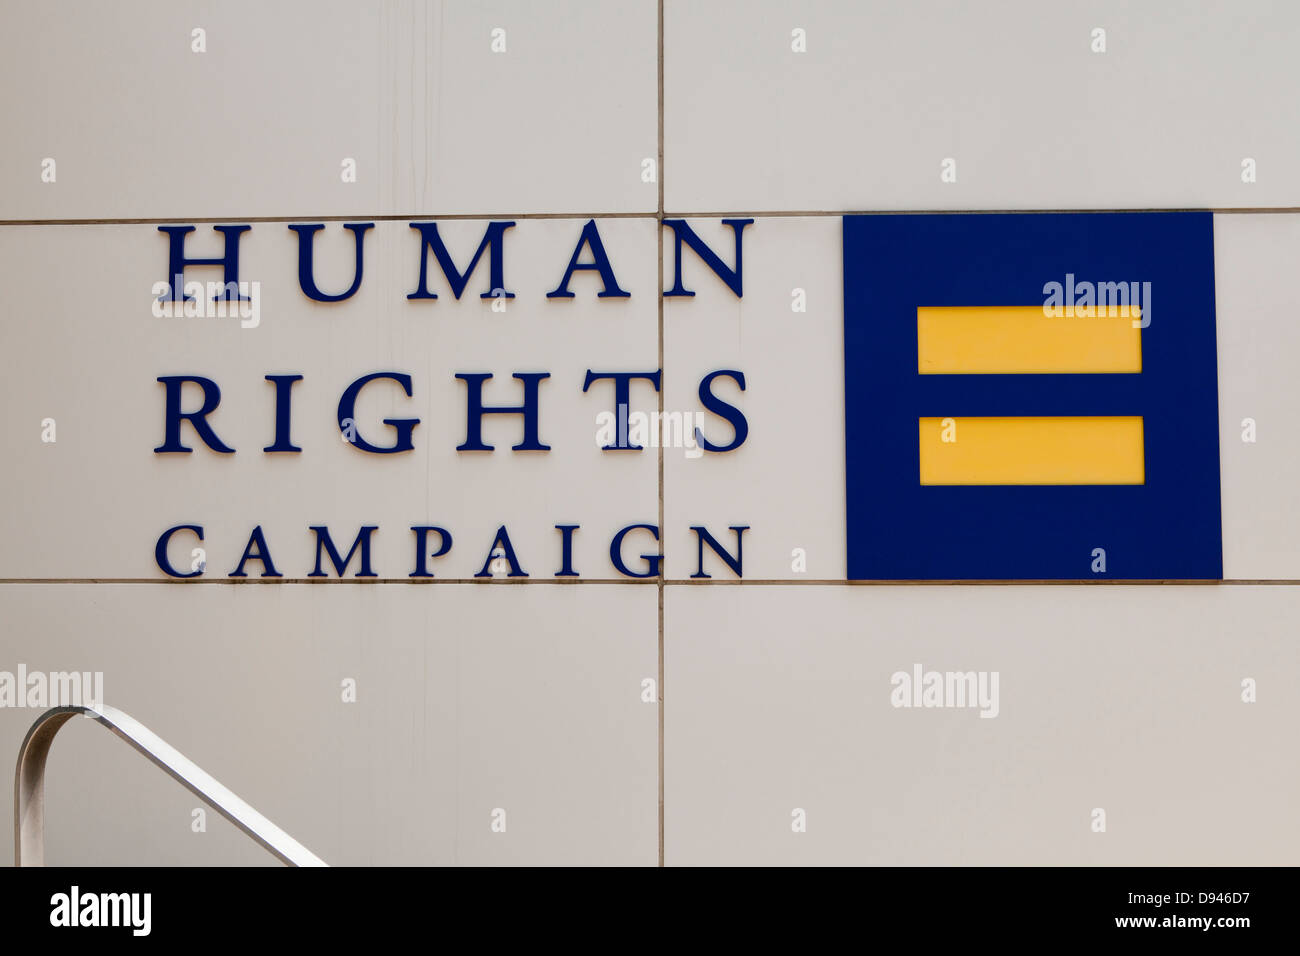 Human Rights Campaign building  - Washington, DC USA Stock Photo